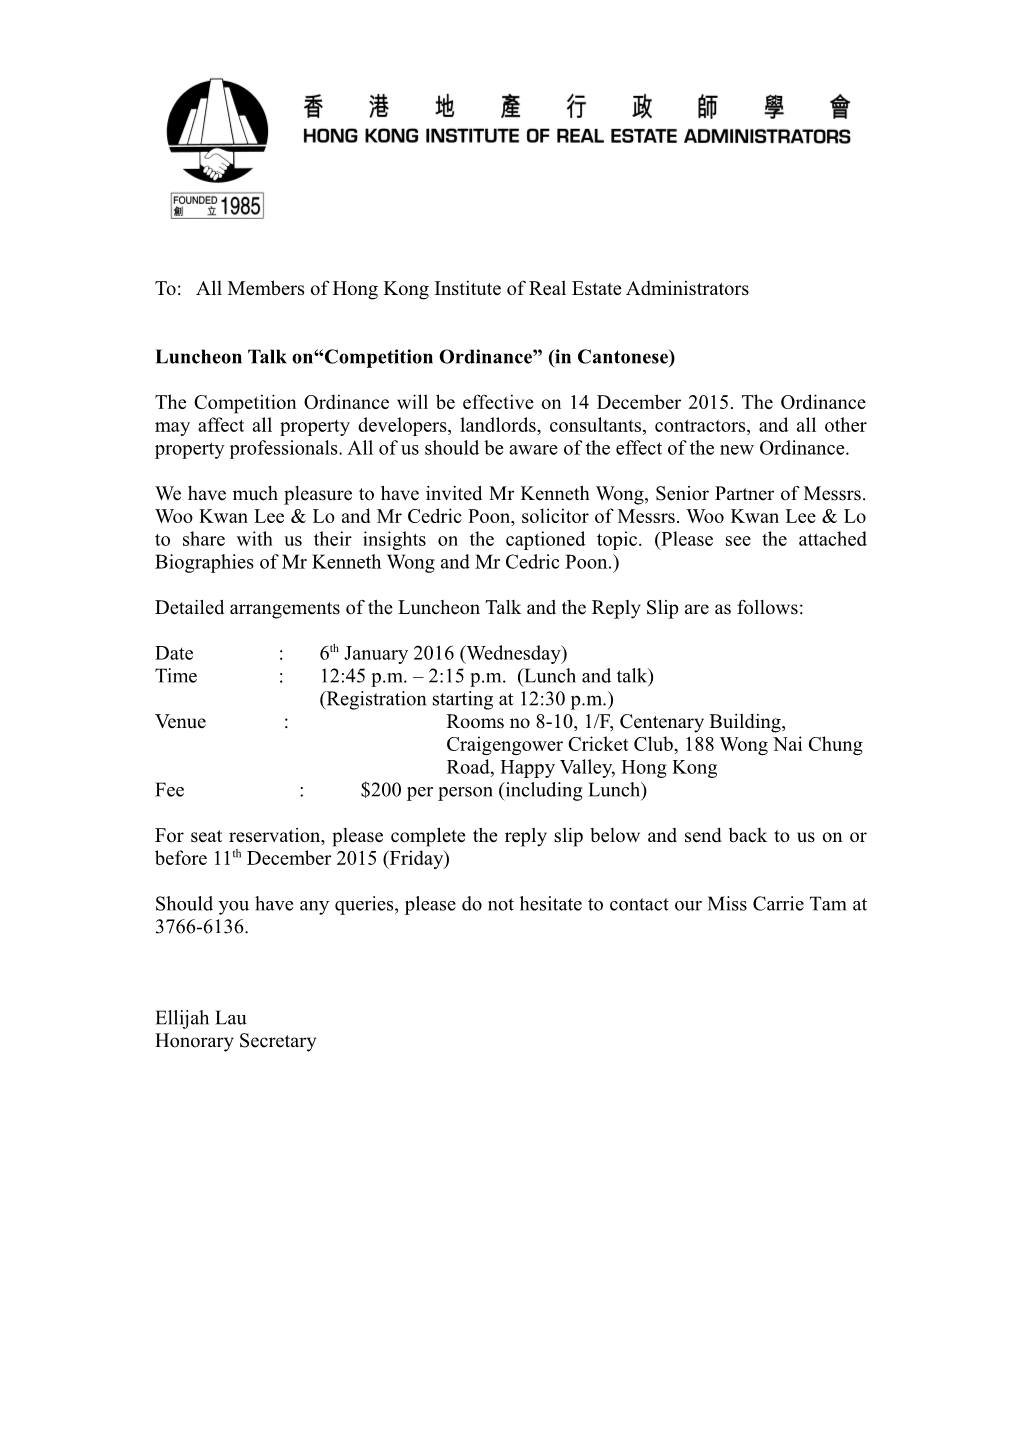 To : All Members of Hong Kong Institute of Real Estate Administrators